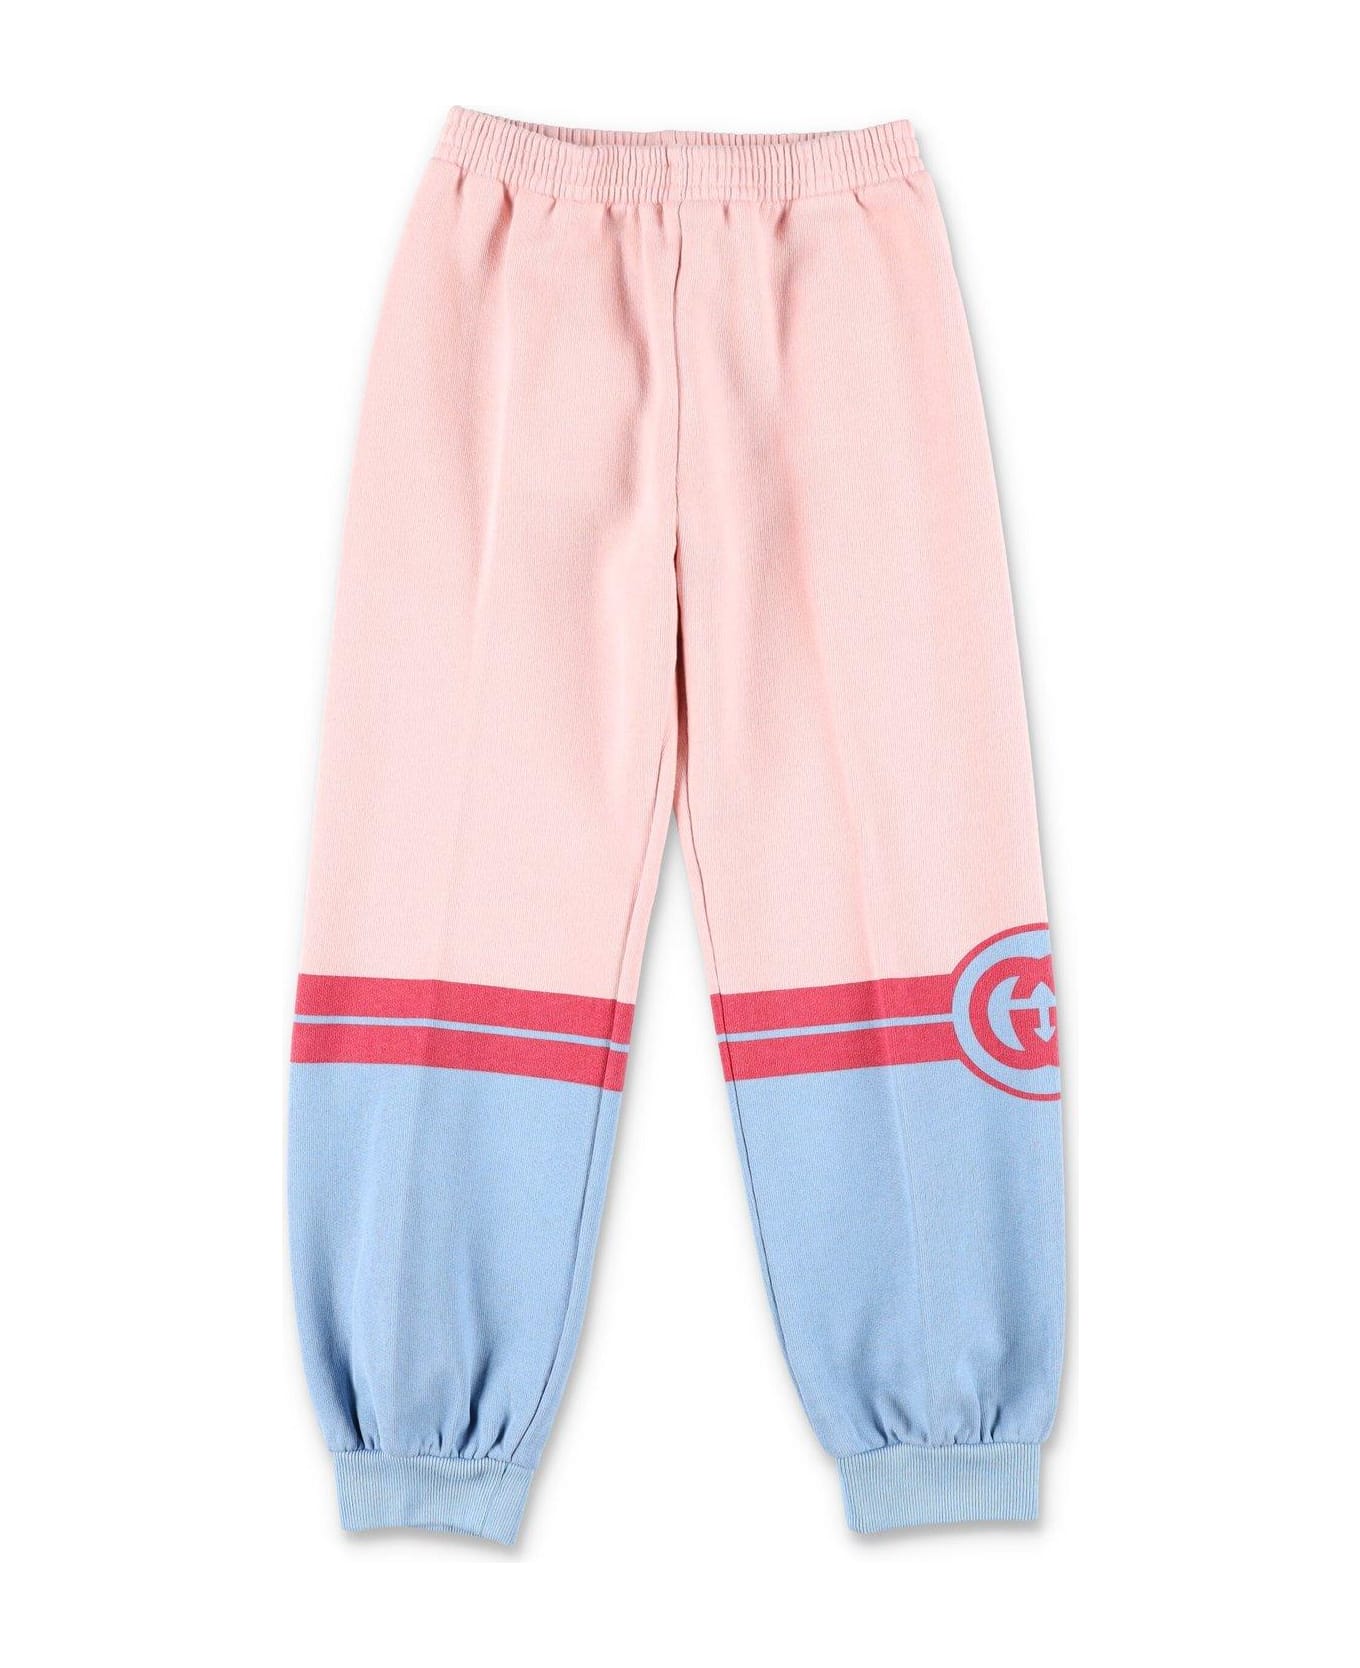 Gucci Interlocking G Printed Jersey Track Pants - Pink